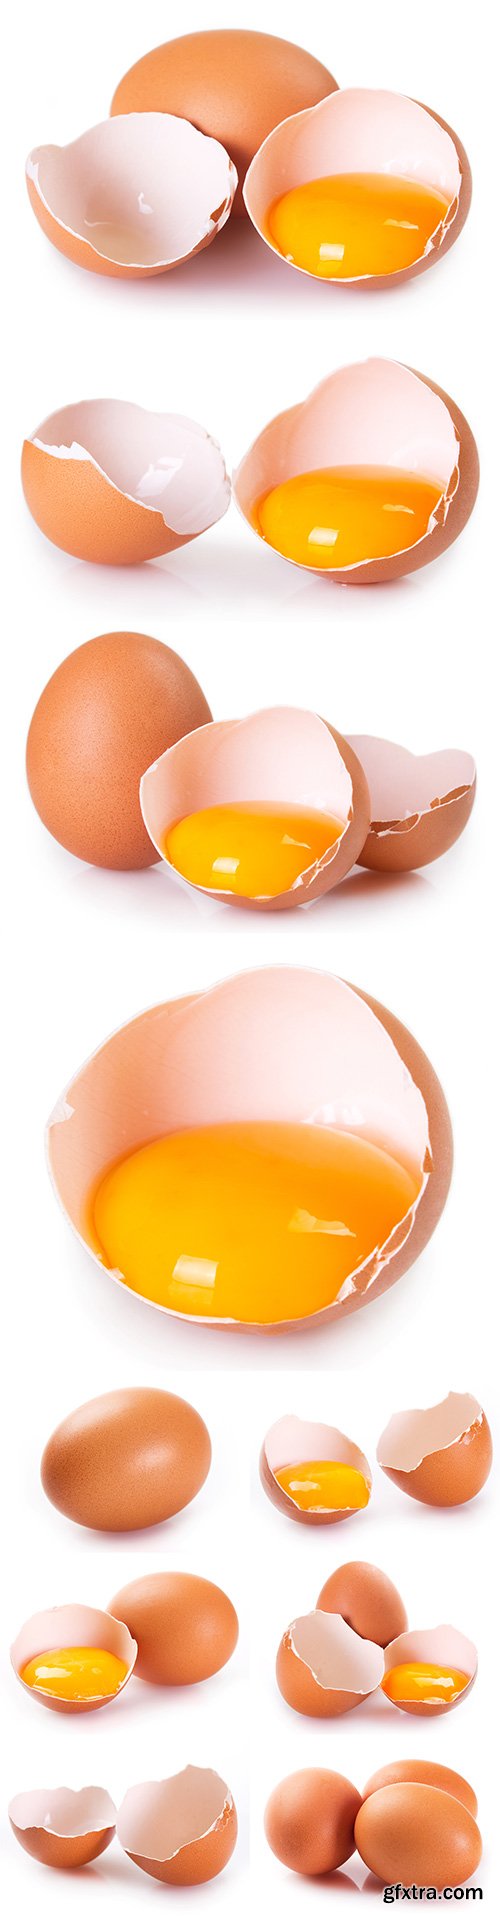 Raw Eggs Isolated - 6xJPGs